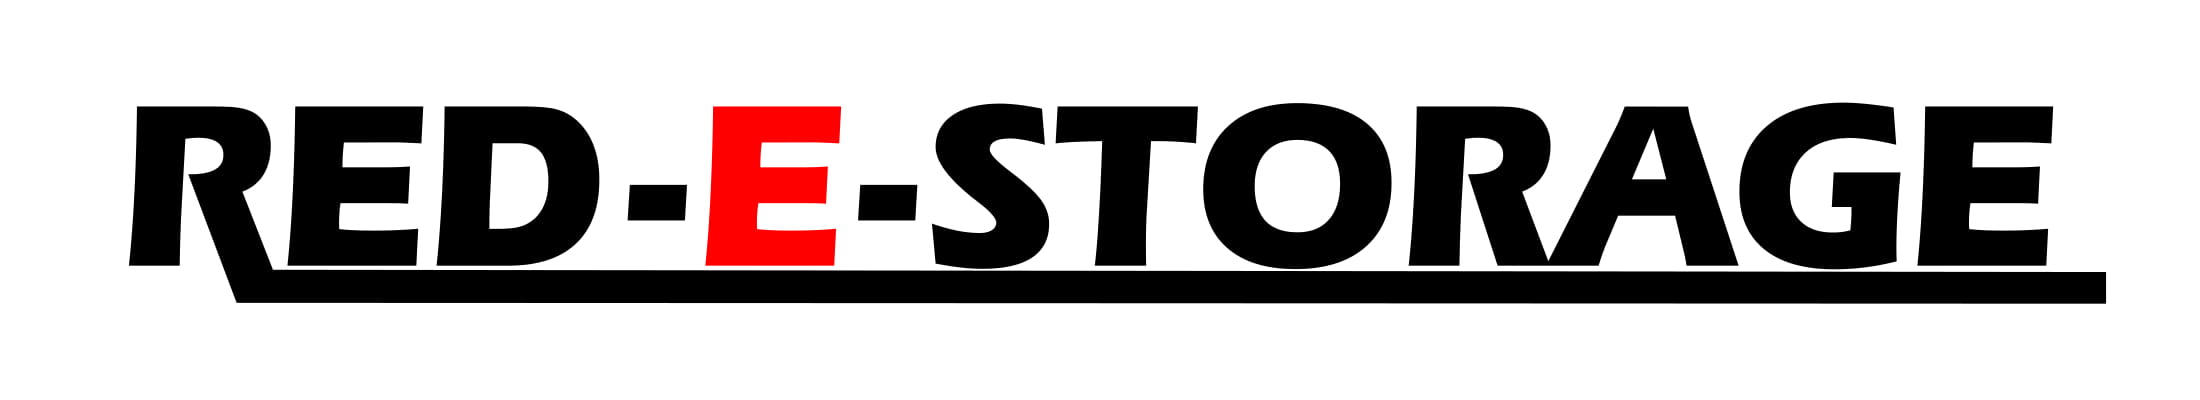 Red E Storage Vector Logo